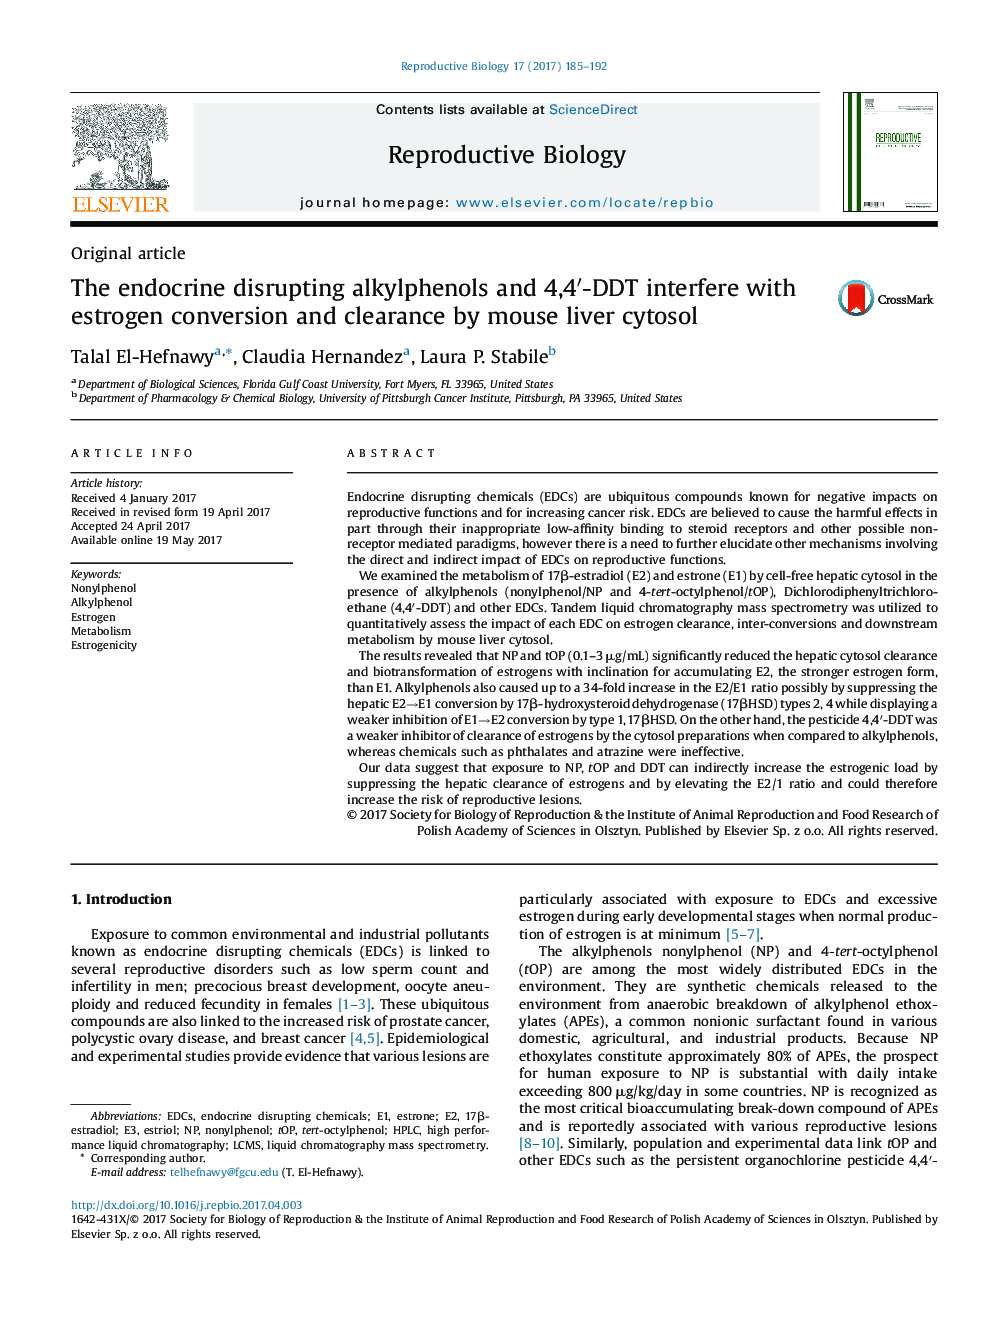 Original articleThe endocrine disrupting alkylphenols and 4,4â²-DDT interfere with estrogen conversion and clearance by mouse liver cytosol